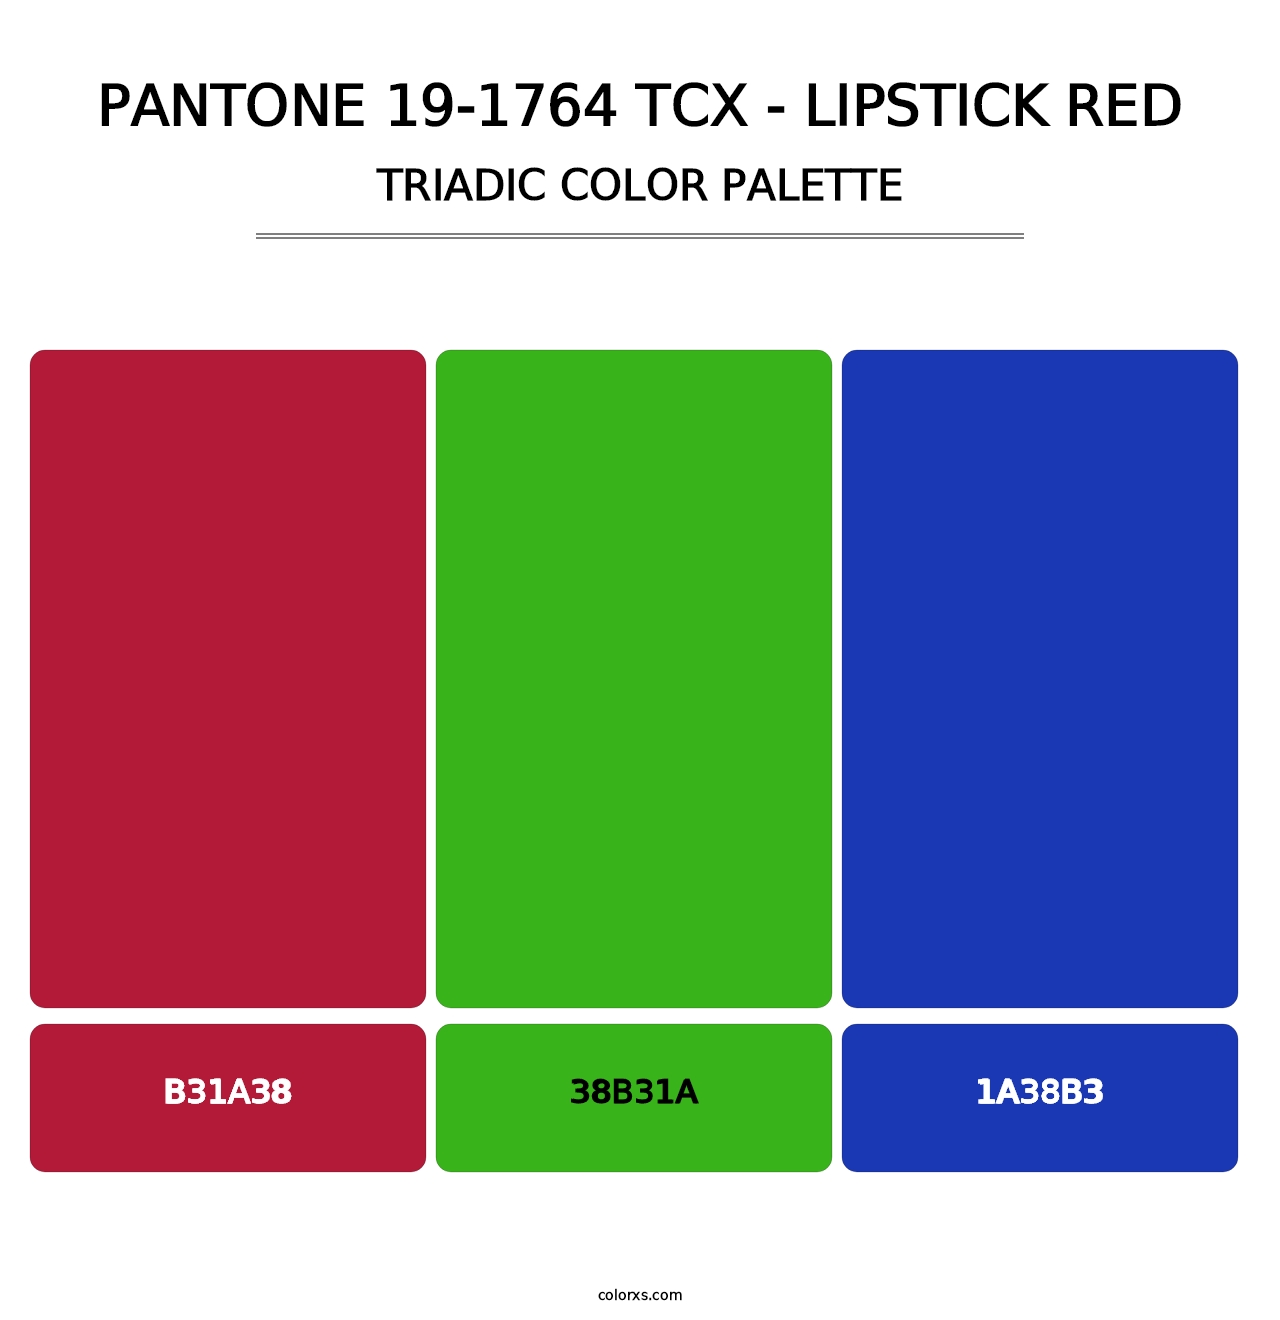 PANTONE 19-1764 TCX - Lipstick Red - Triadic Color Palette